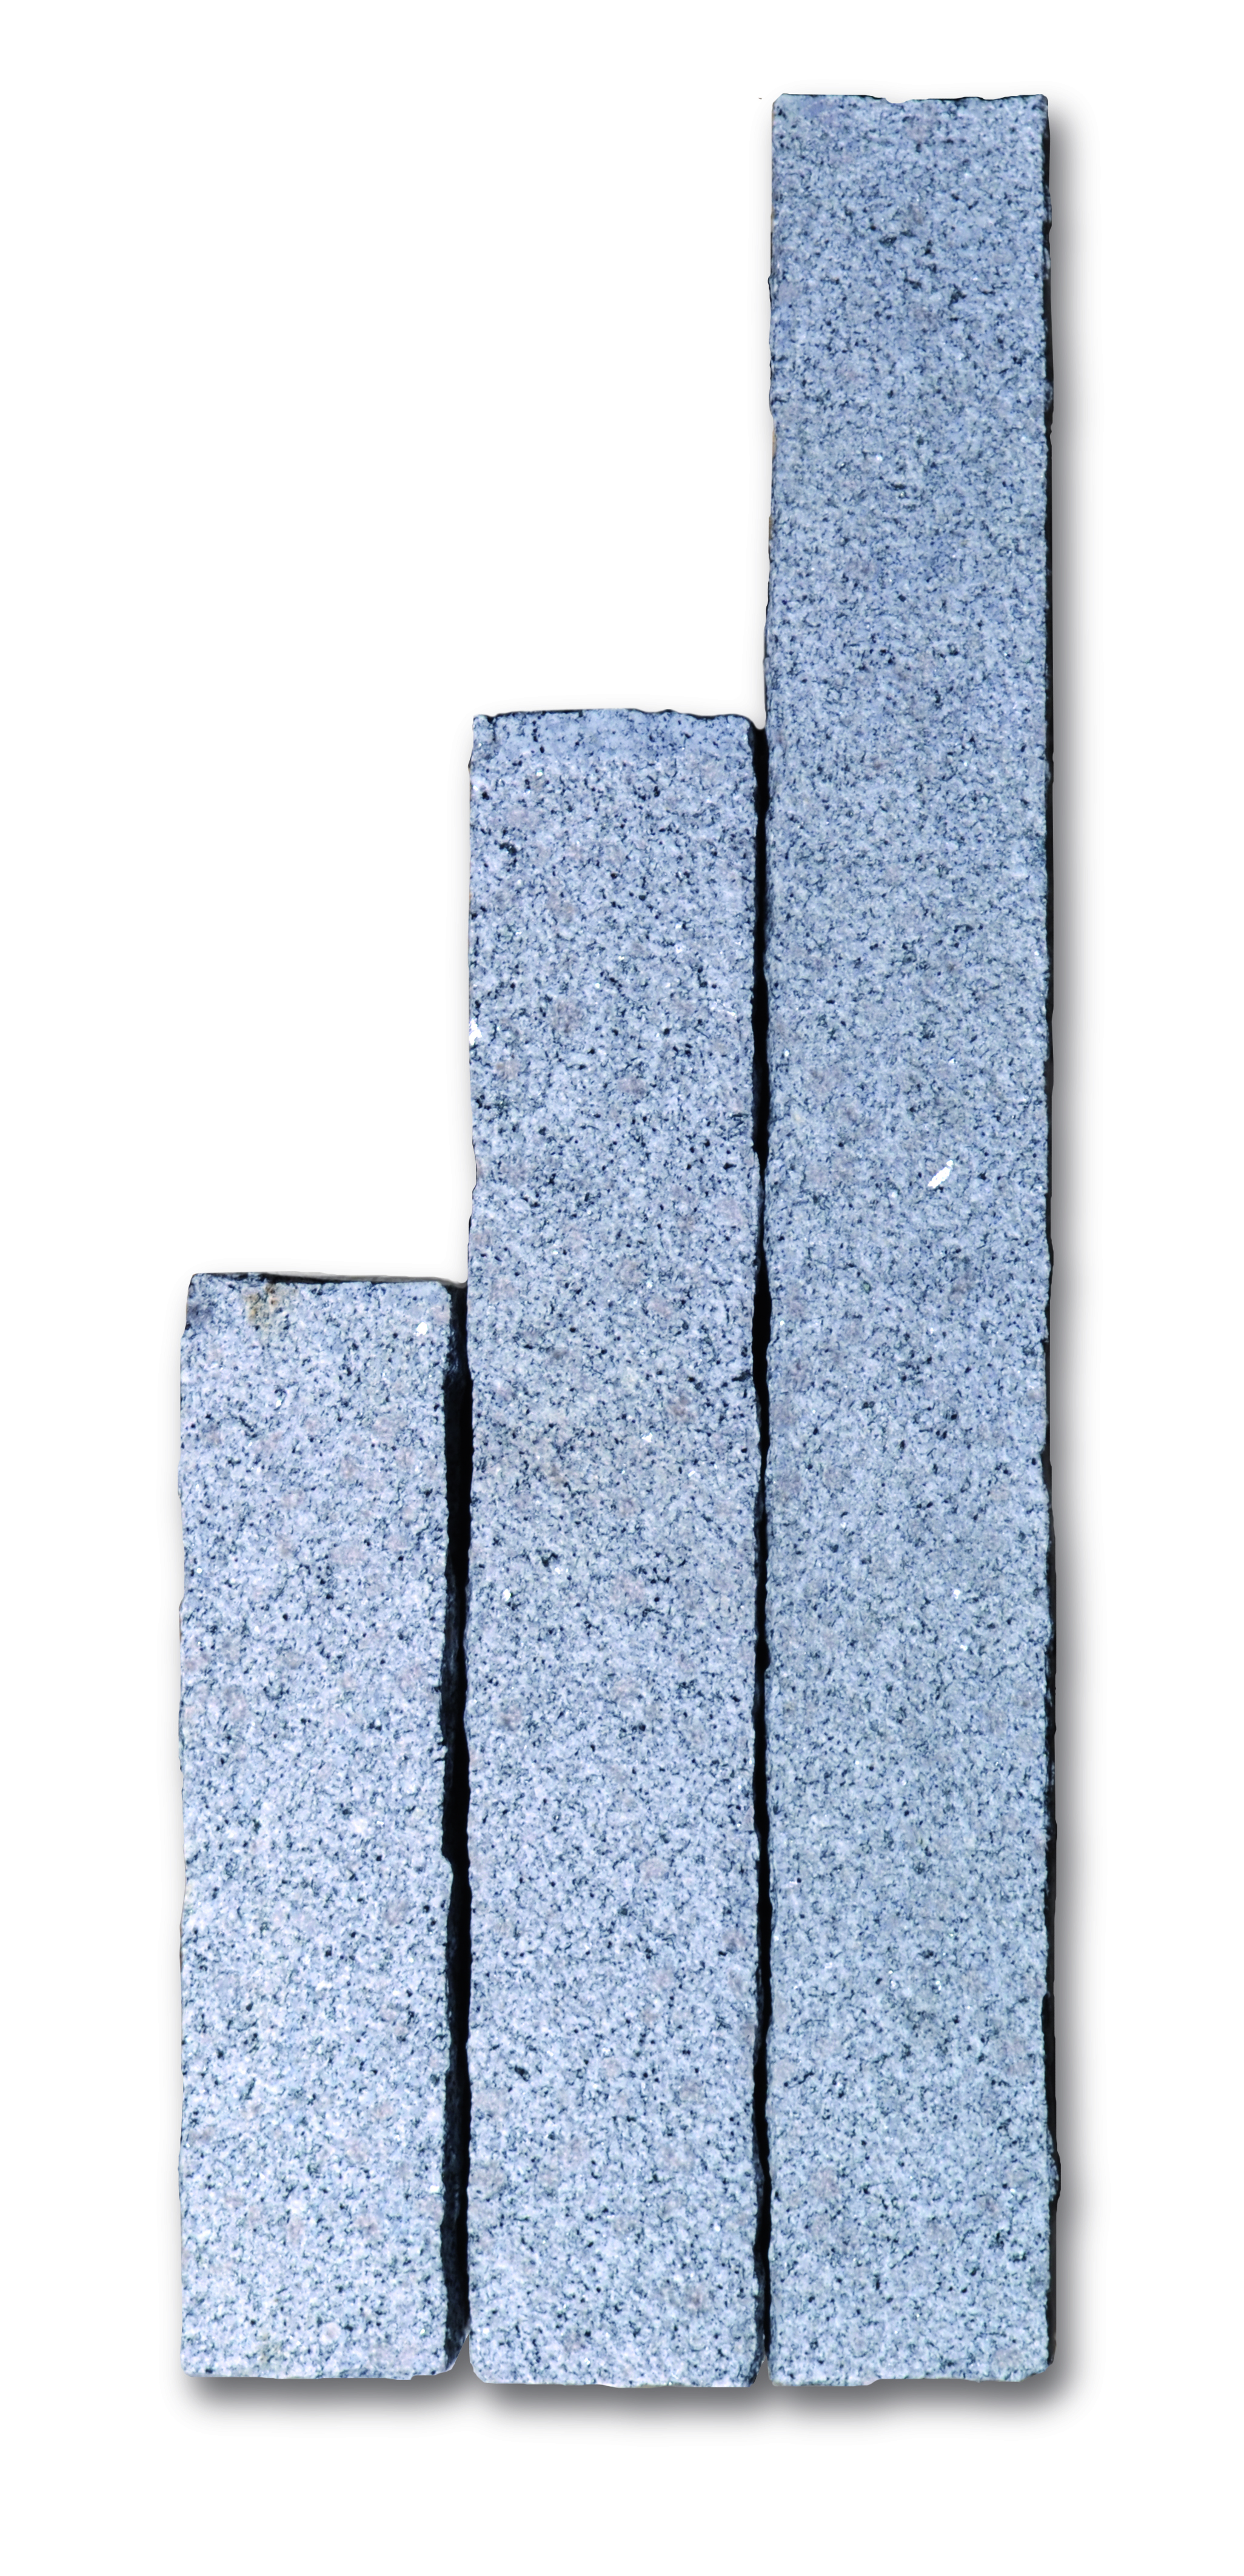 ZL OST Palisade BASIC gestockt 12x12x125cm grau Granit China